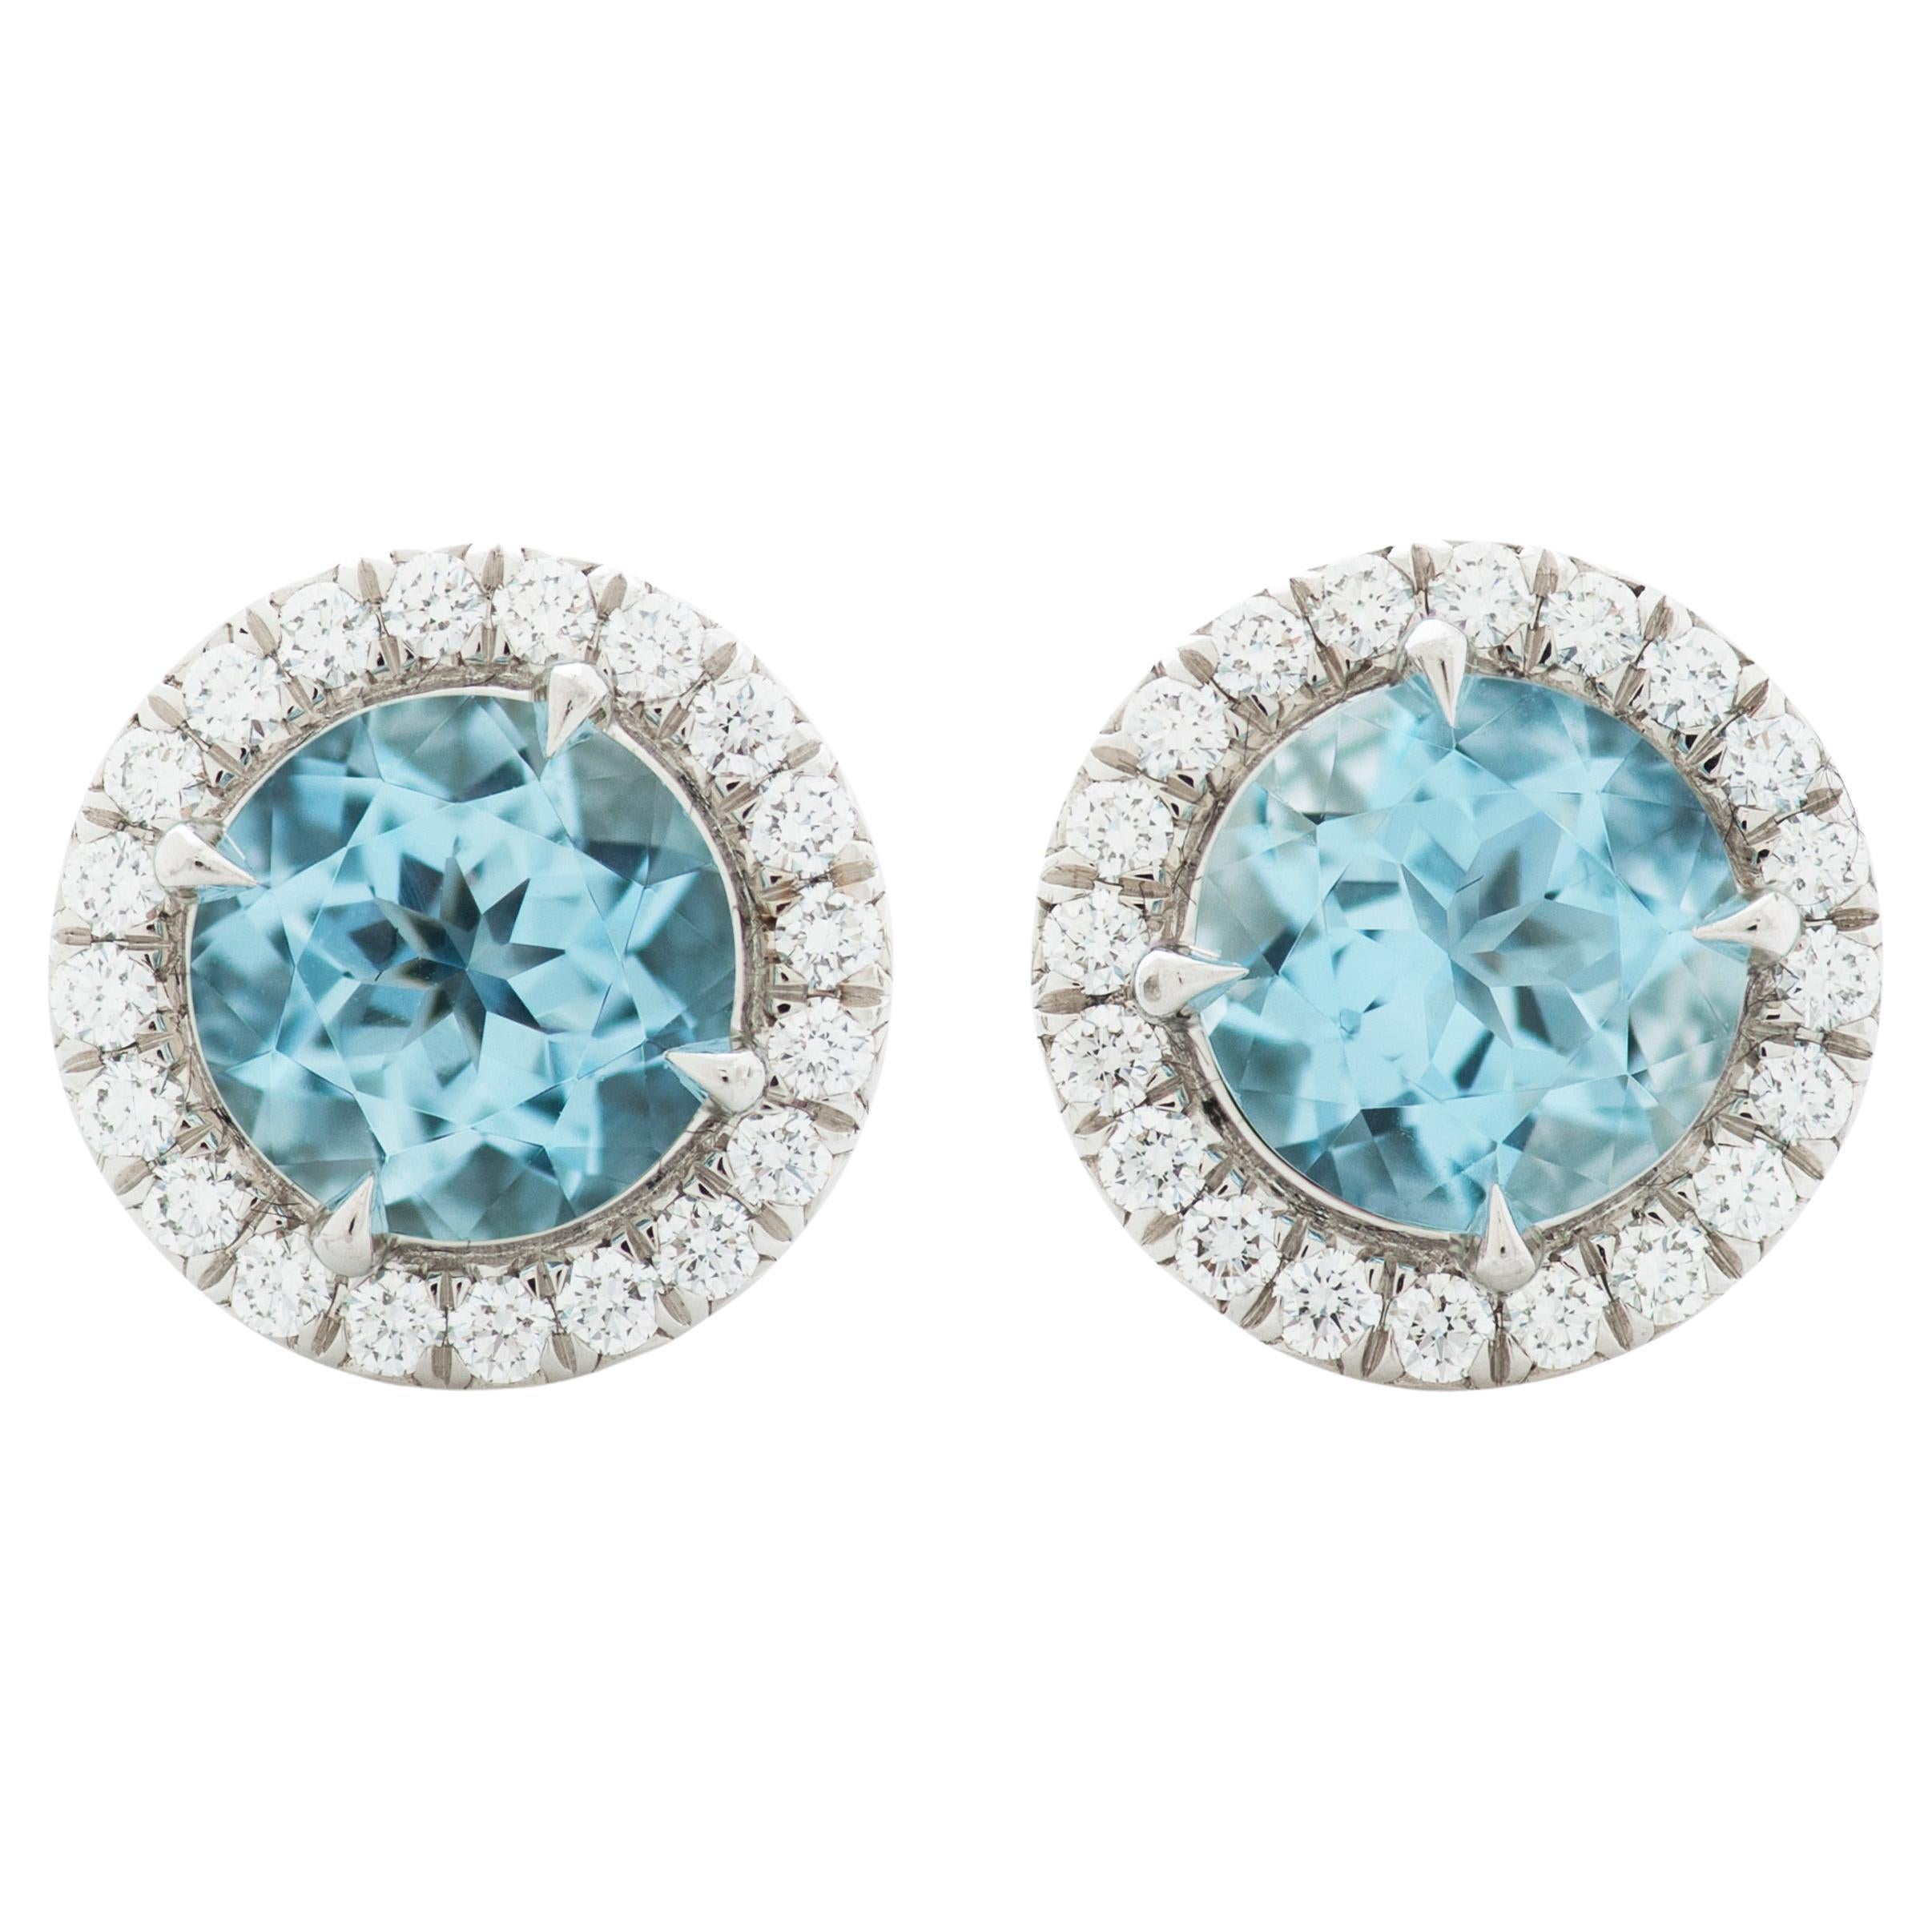 Tiffany & Company Soleste Aquamarine and Diamond Halo Stud Earrings in Platinum